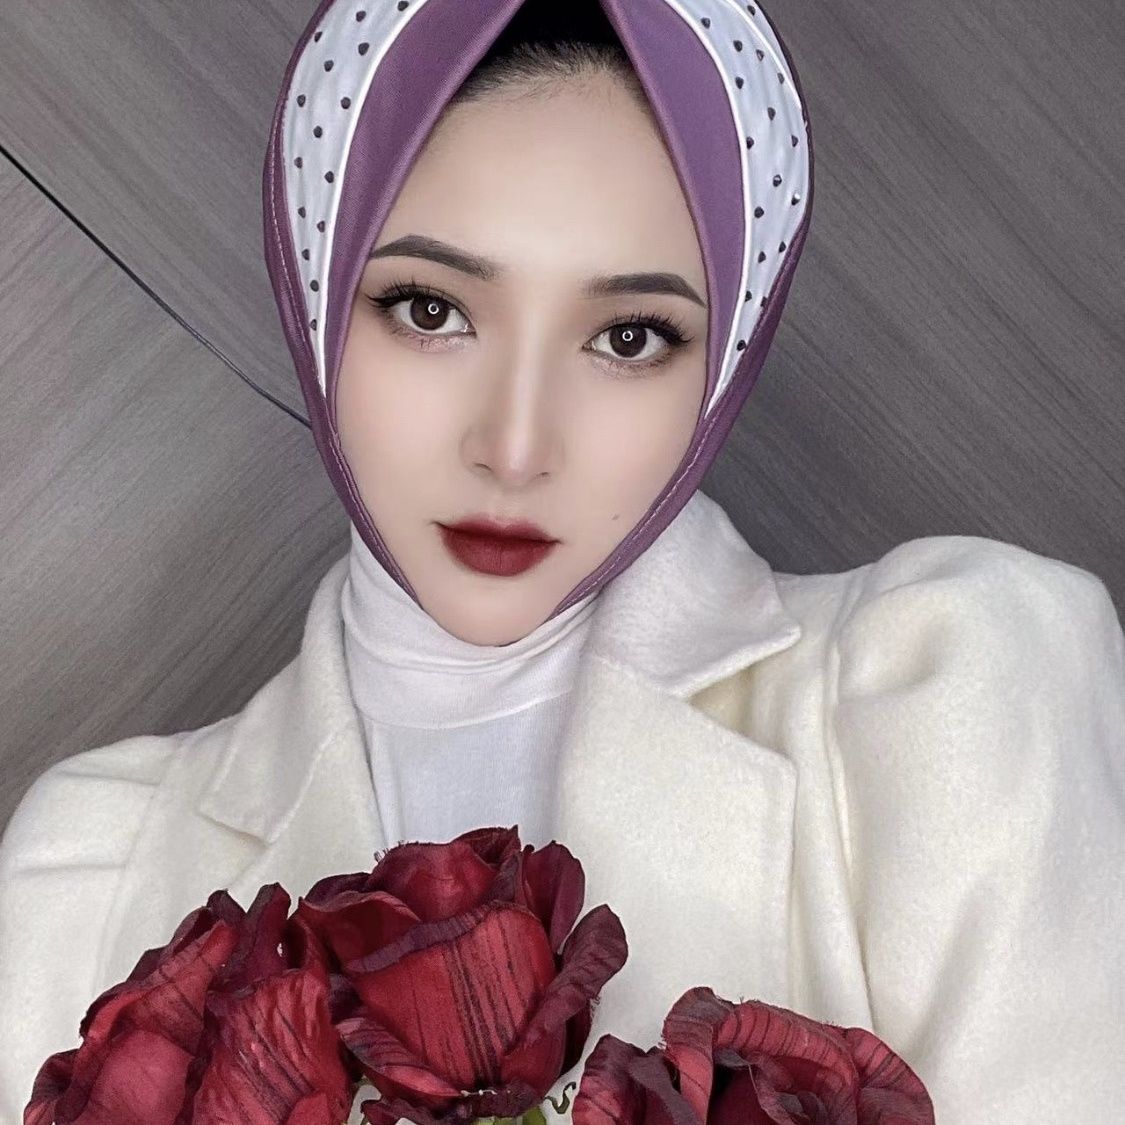 Shawl female muslim cross splicing leisure hot drill soft hat brim pullover